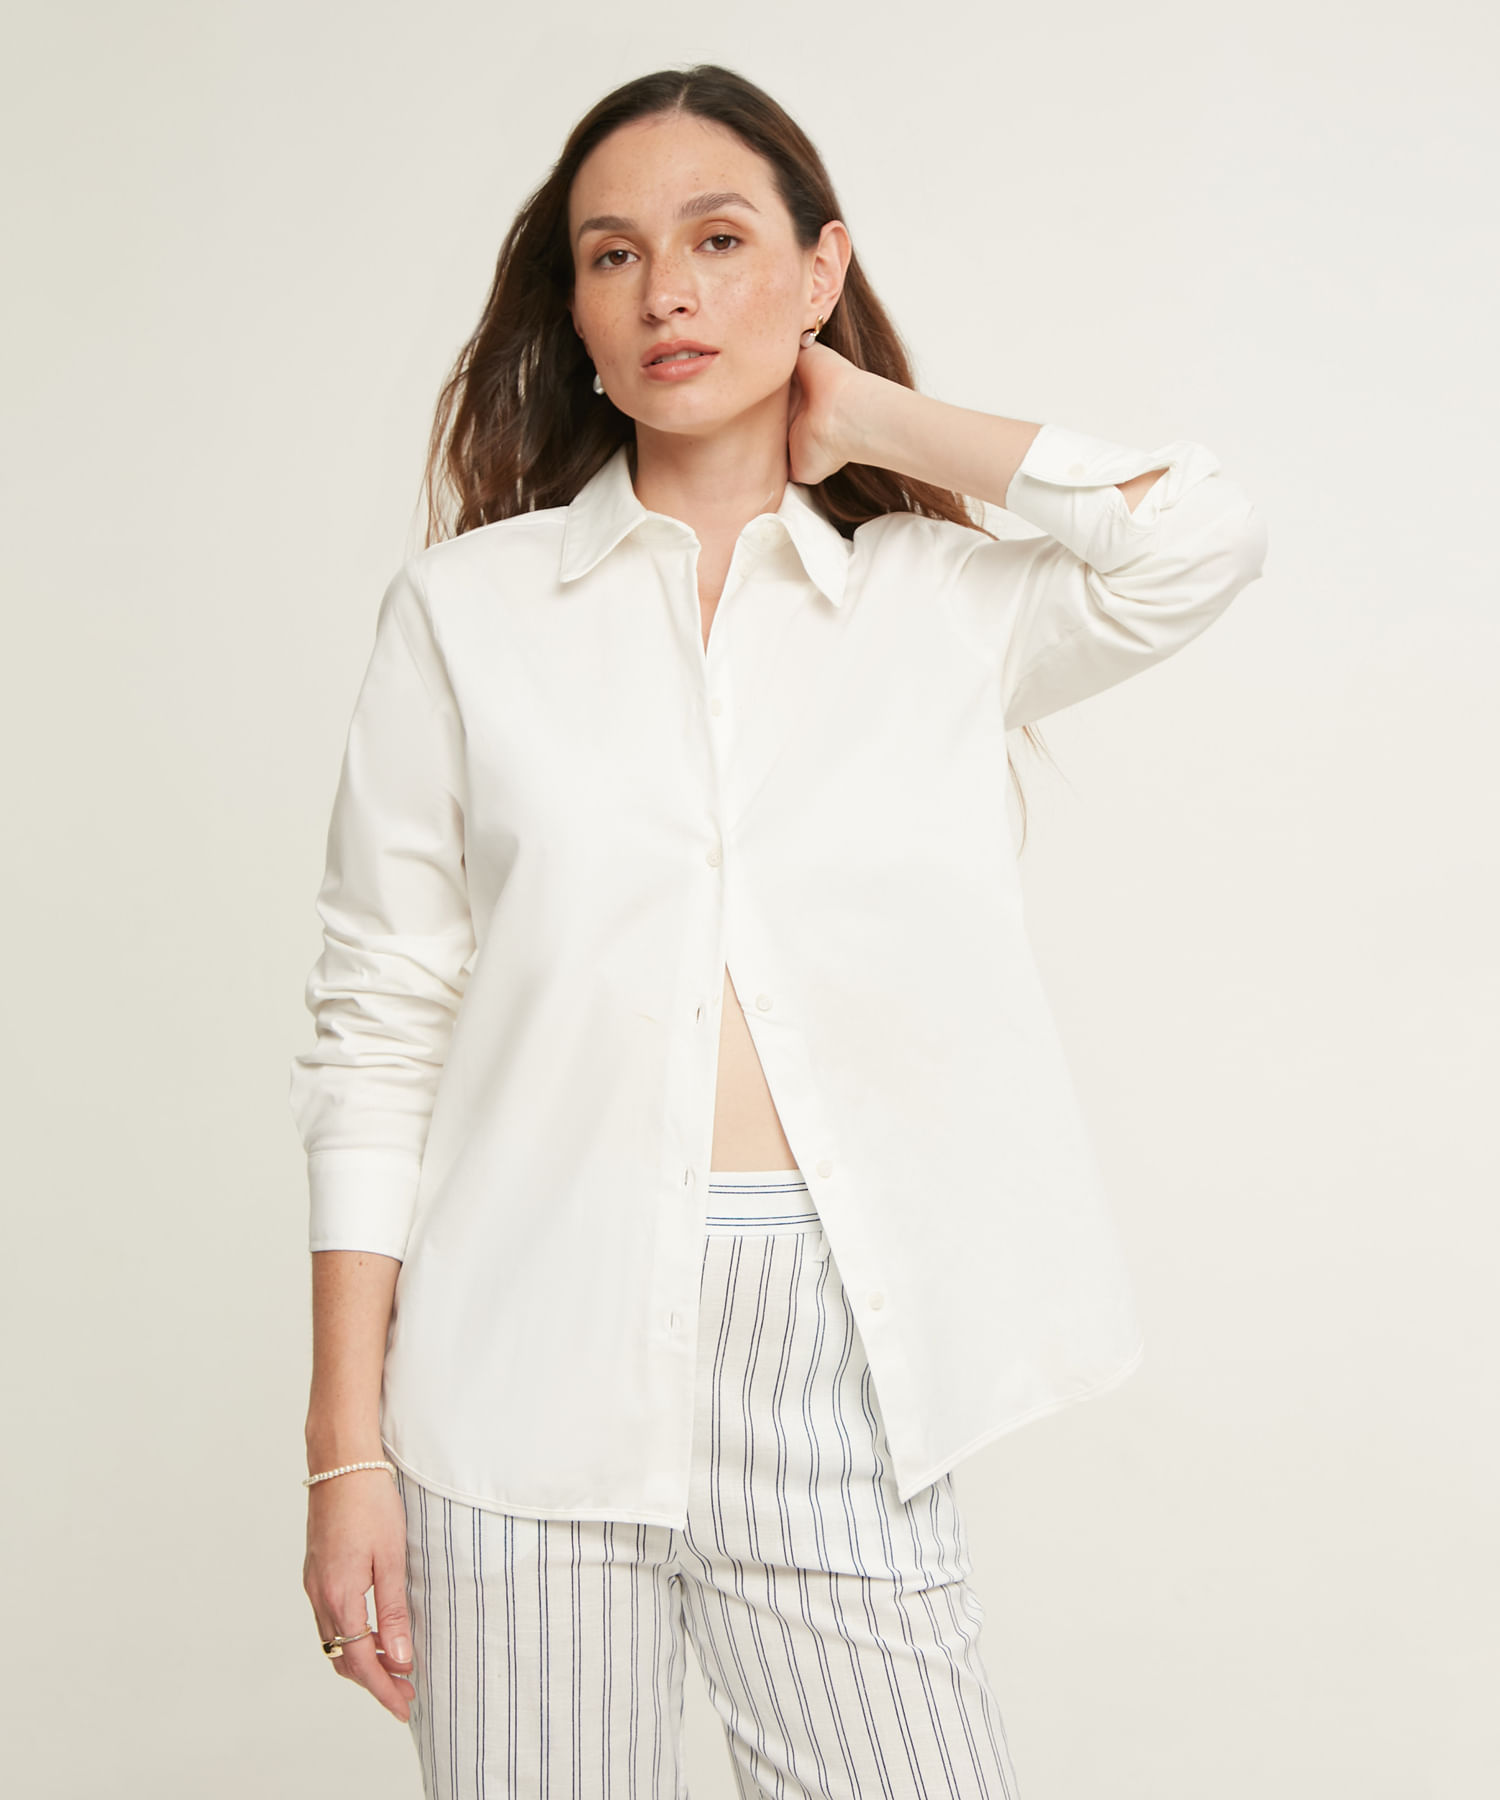 Modelutti-camisa de popelina de manga larga para mujer, blusas sencillas y  ajustadas, Tops informales elegantes